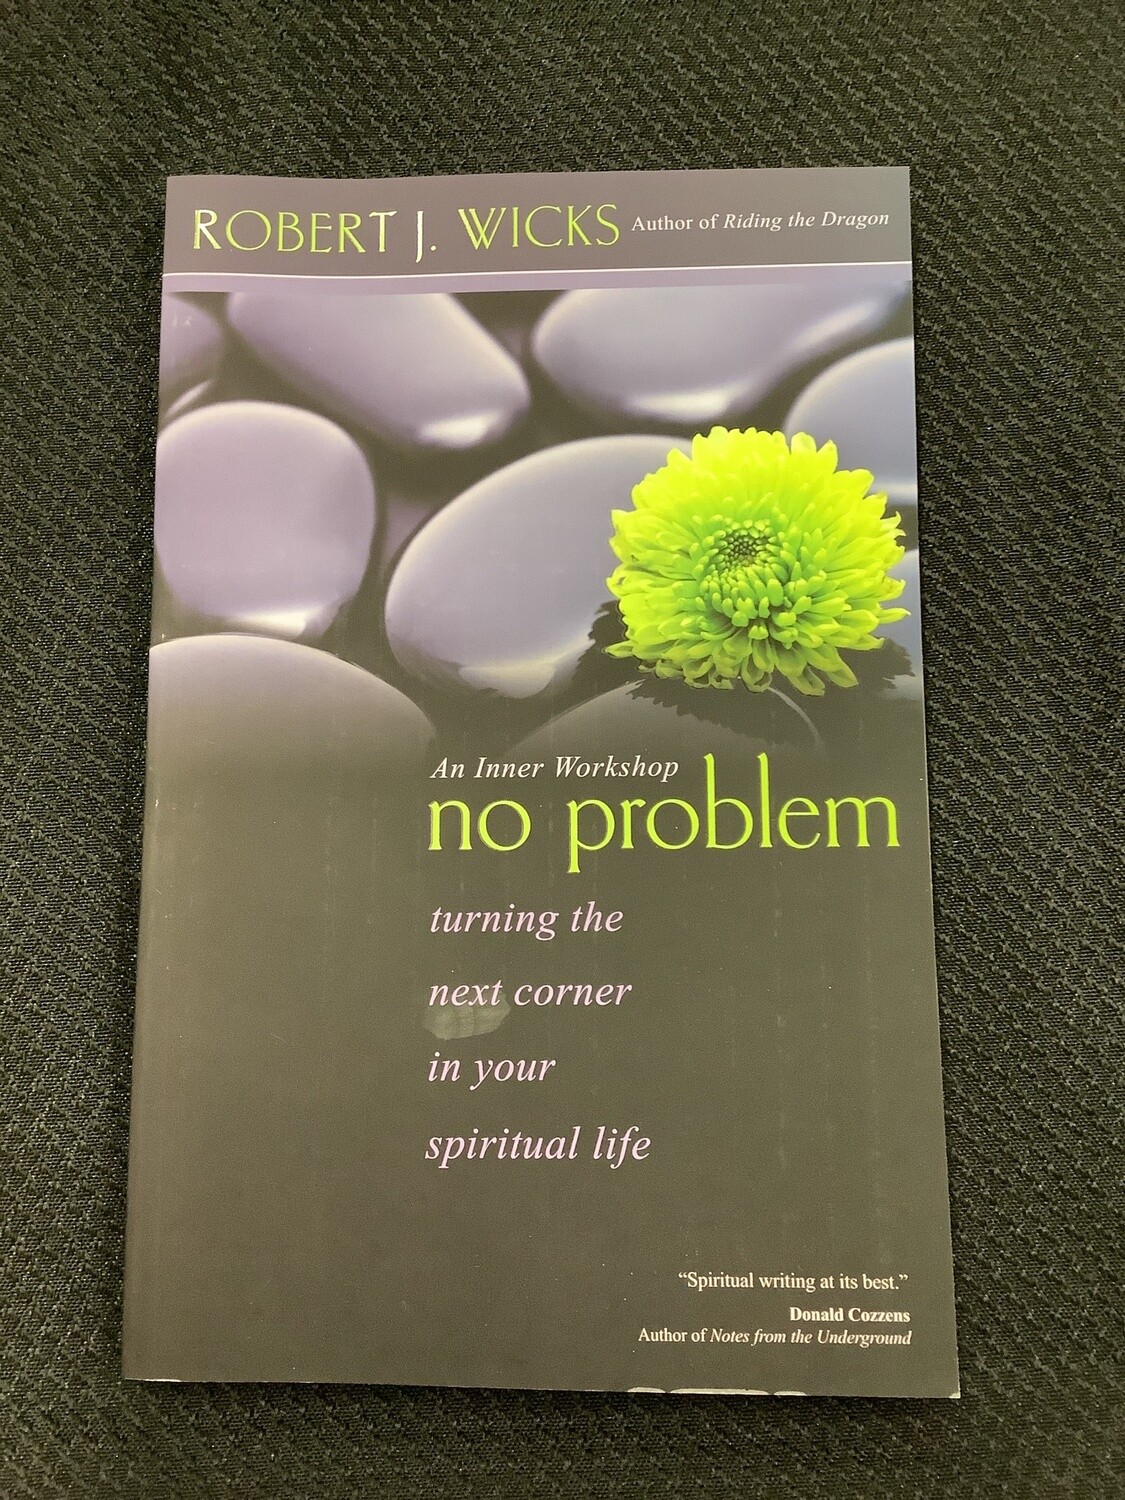 An Inner Workshop No Problem Turning the Next Corner in you Spiritual Life - Robert J. Wicks